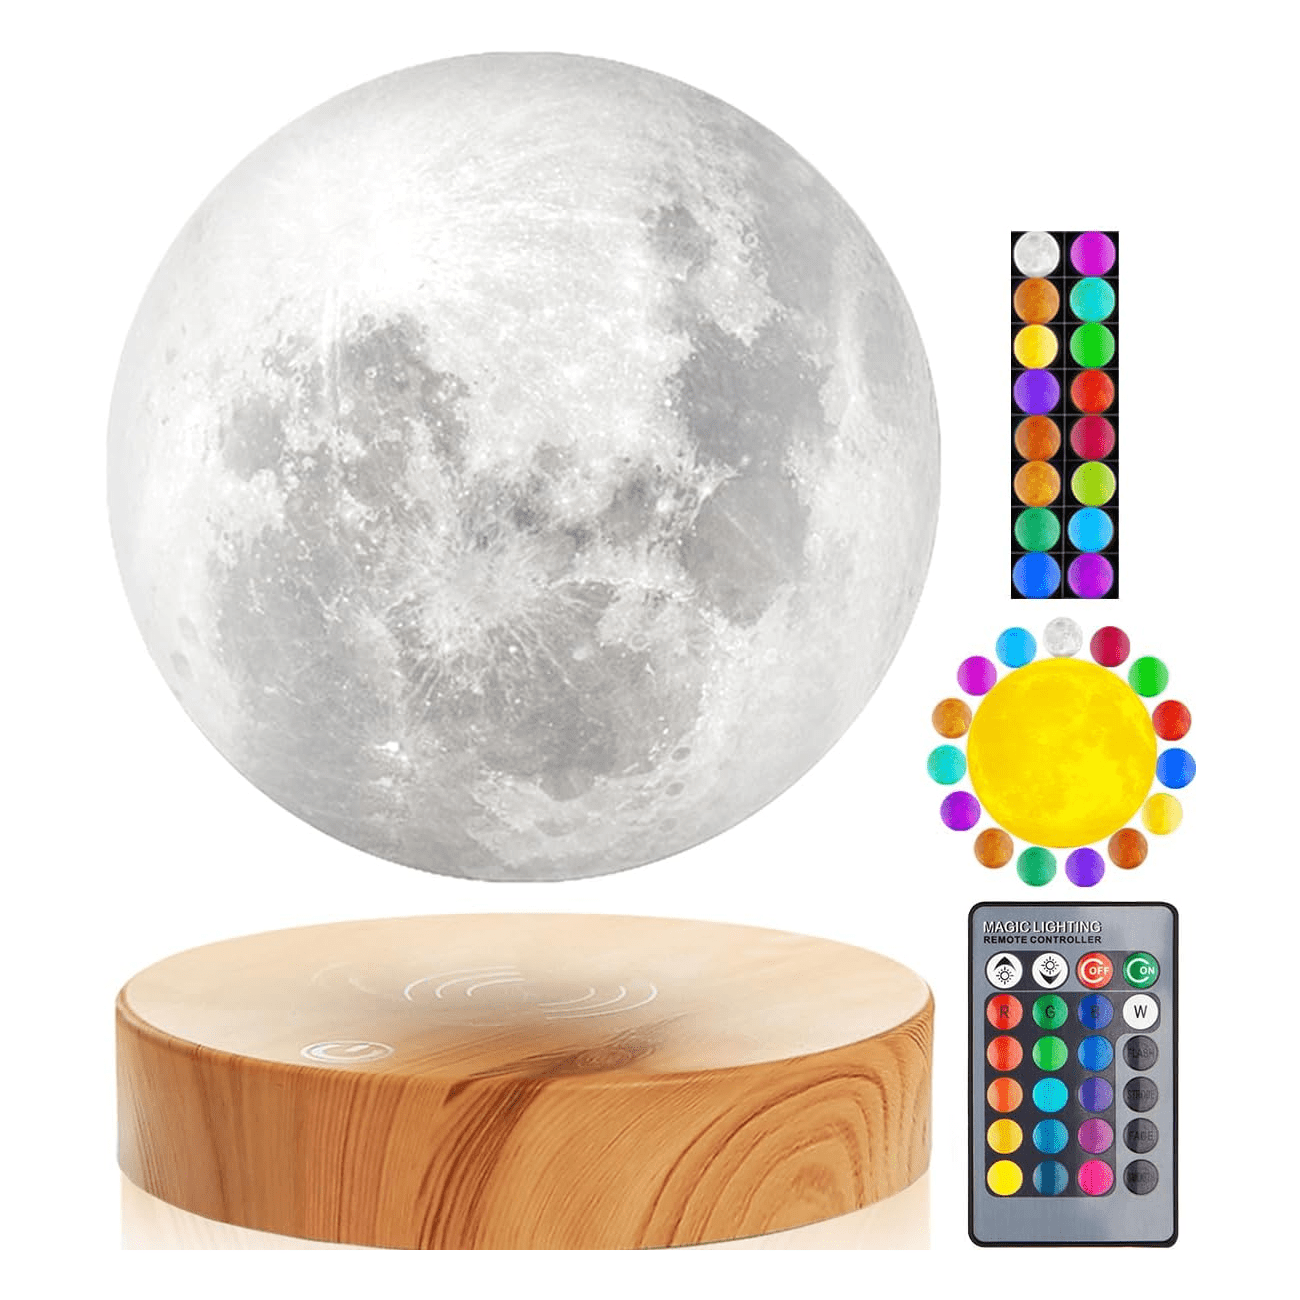 Lampada Luna Magnetica | La Luna a Casa tua